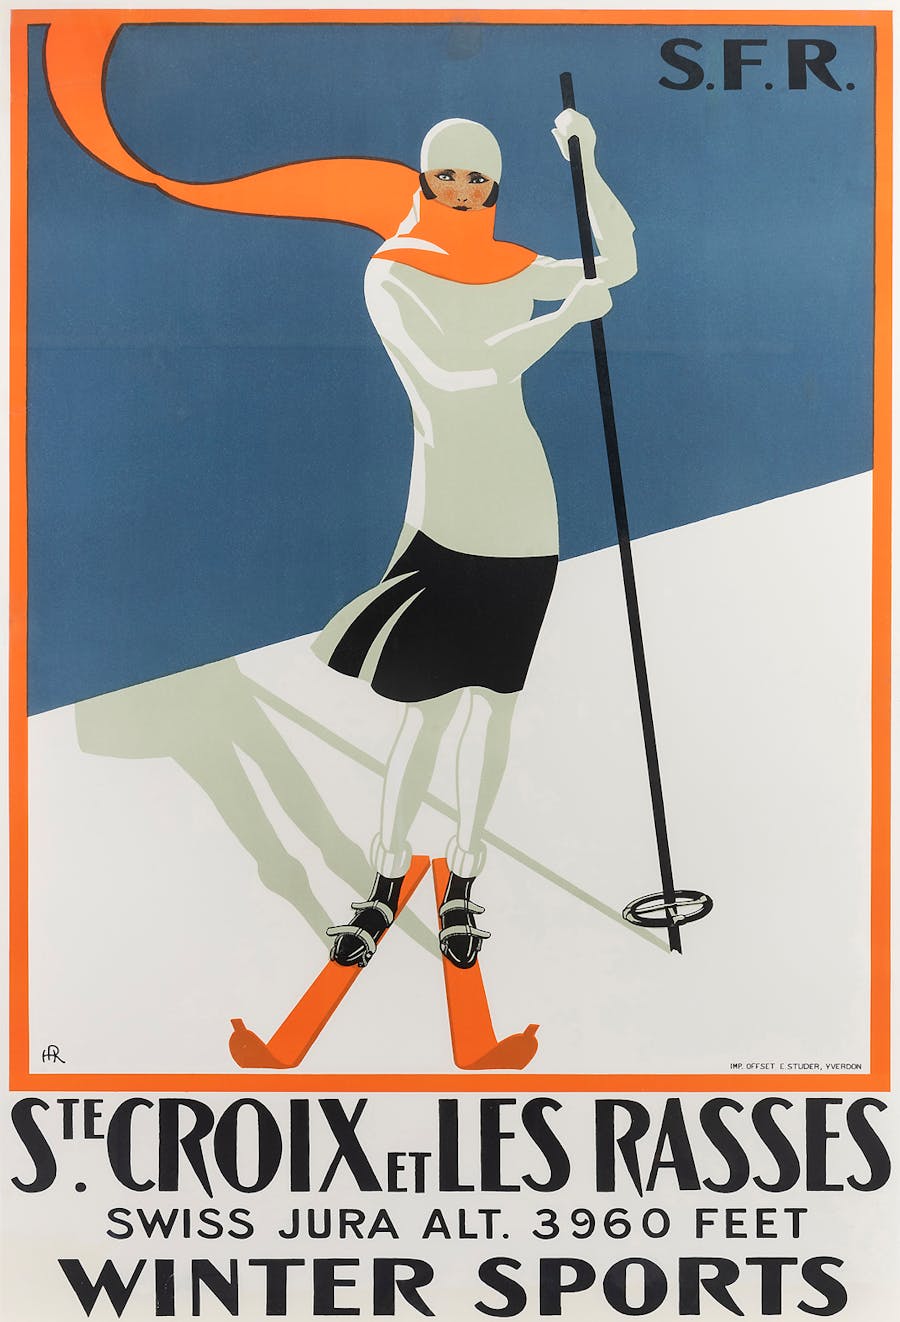 R.H., Ste. Croix et Les Rasses Lithographic Poster, 1922. Photo © Lyon & Turnbull